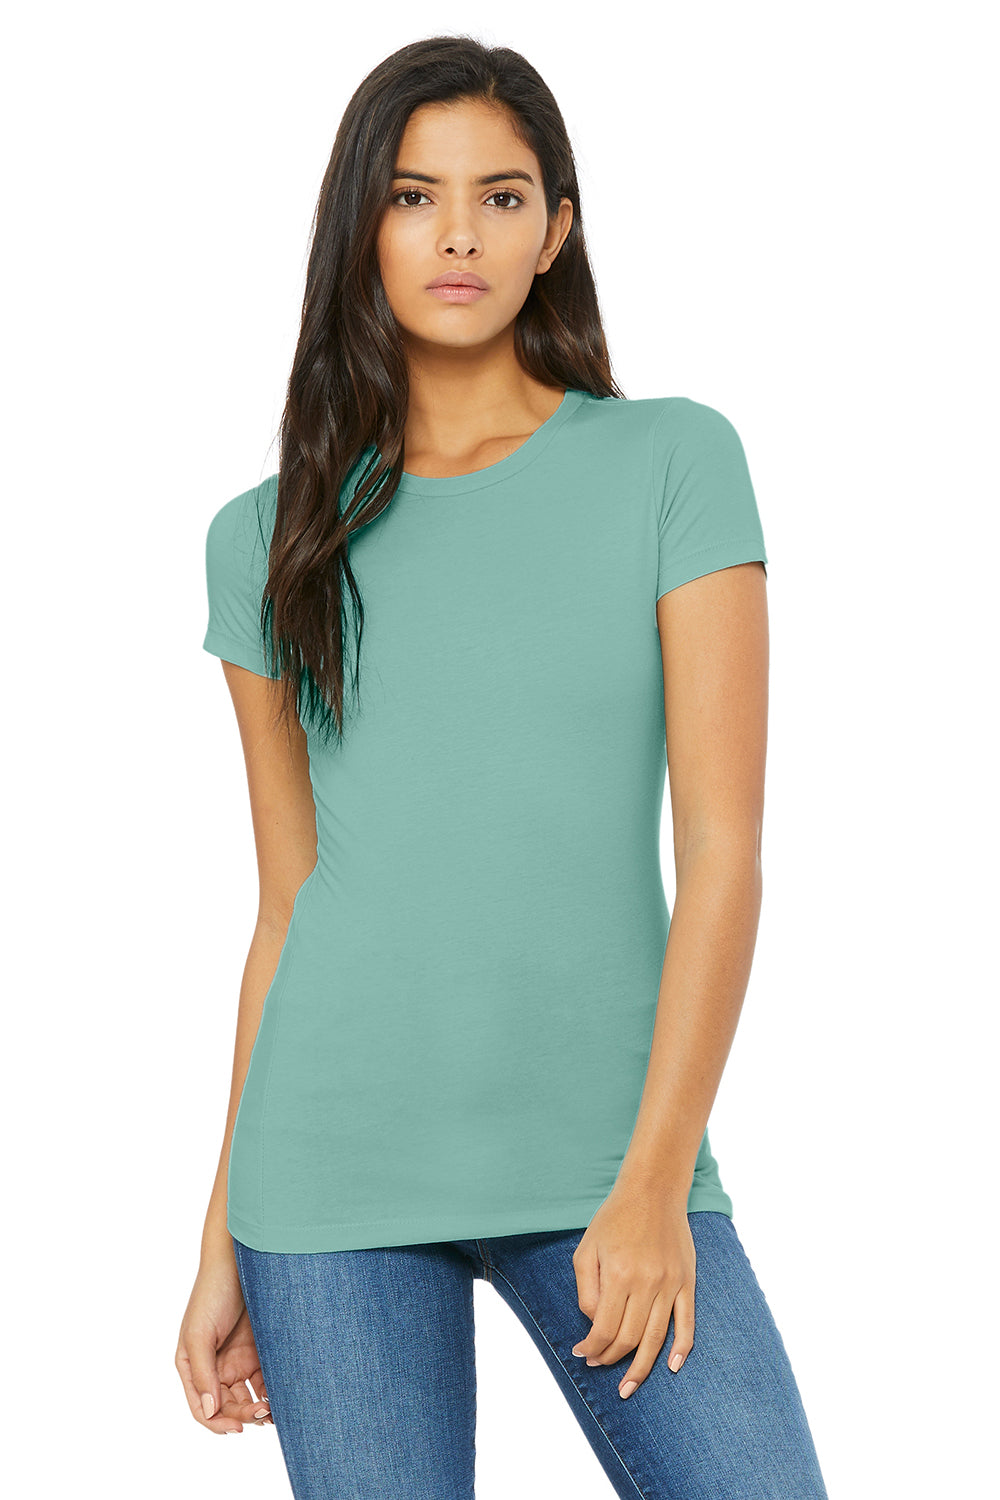 Bella + Canvas 6004 Womens The Favorite Short Sleeve Crewneck T-Shirt Seafoam Blue Front